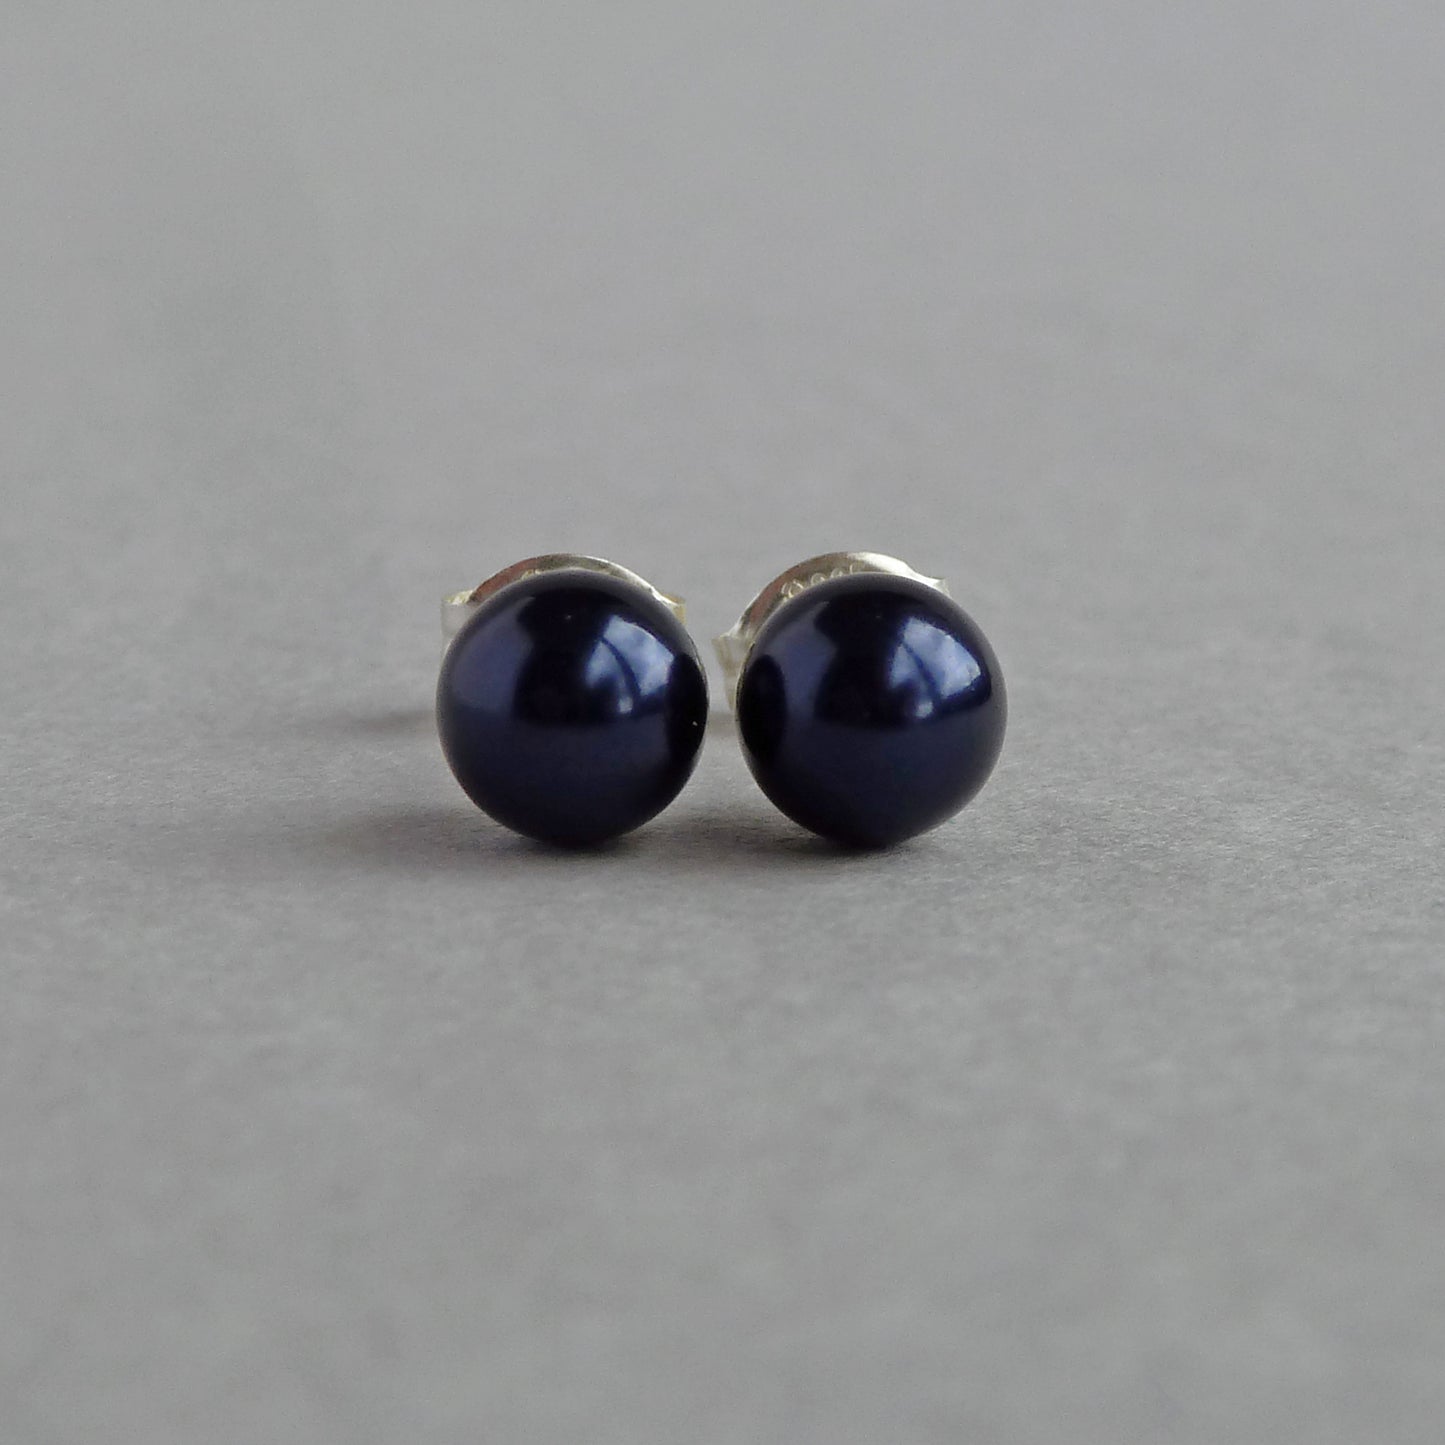 6mm Navy Pearl Stud Earrings - Small, Dark Blue, Glass Pearl Studs